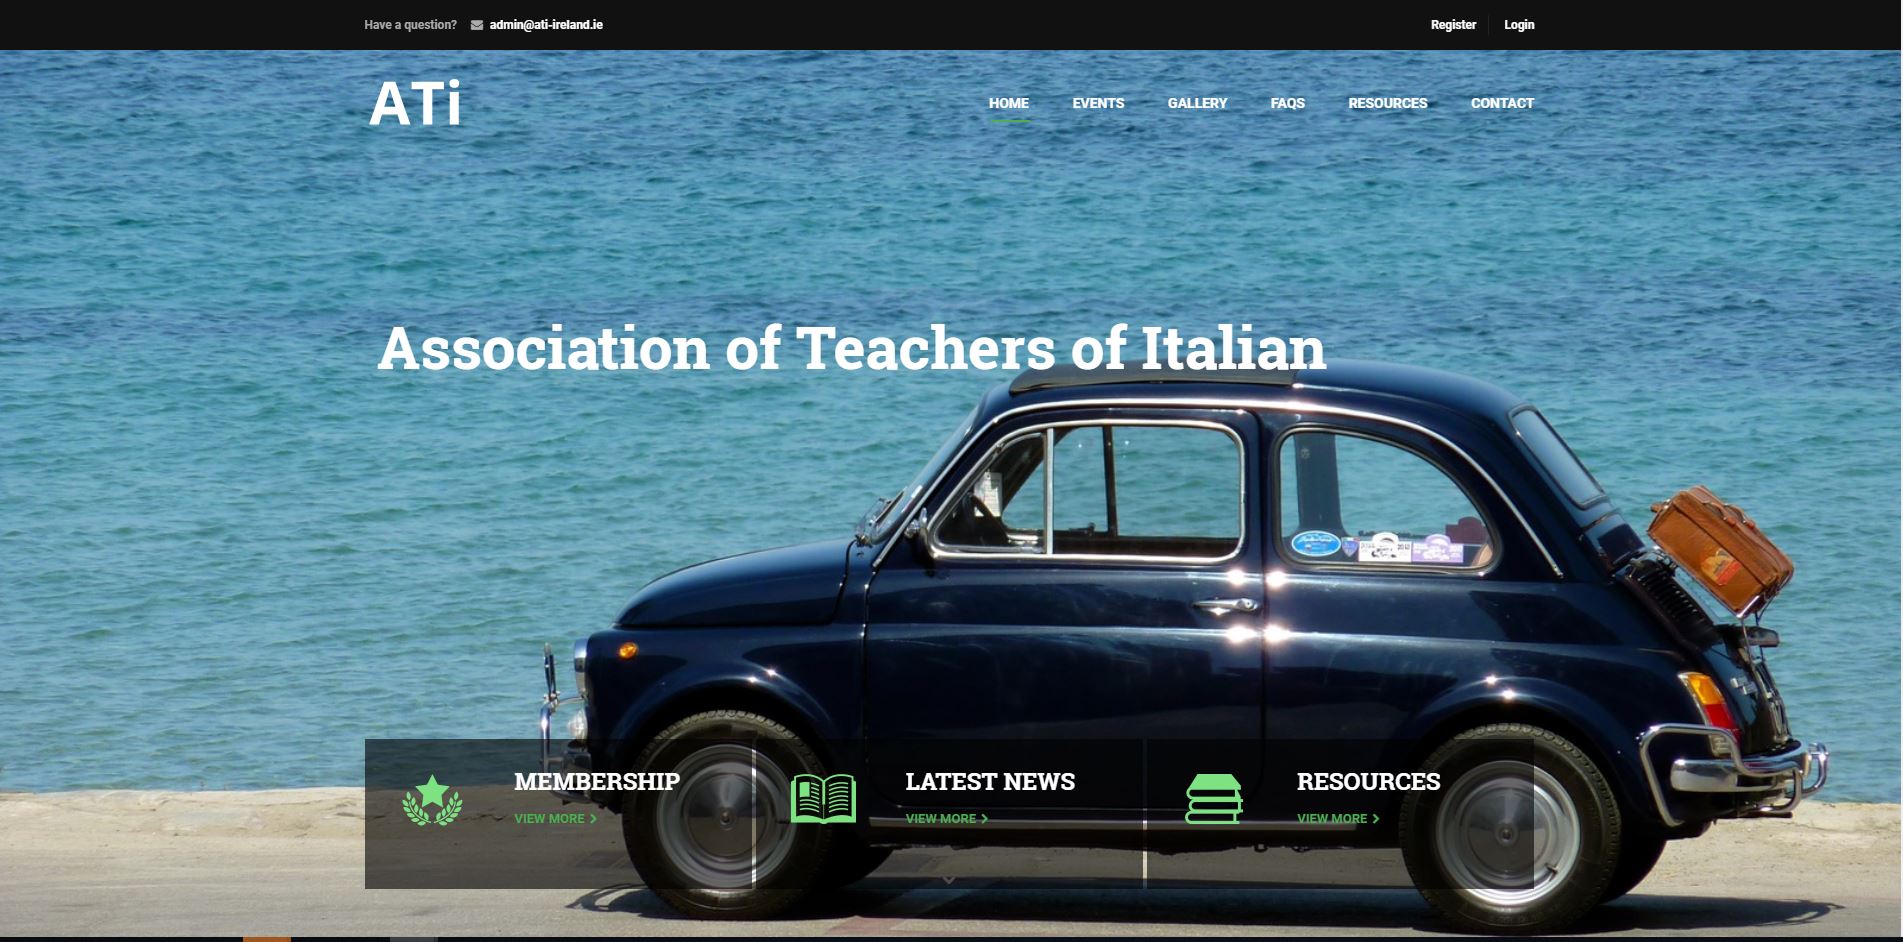 Association of Teachers of Italian